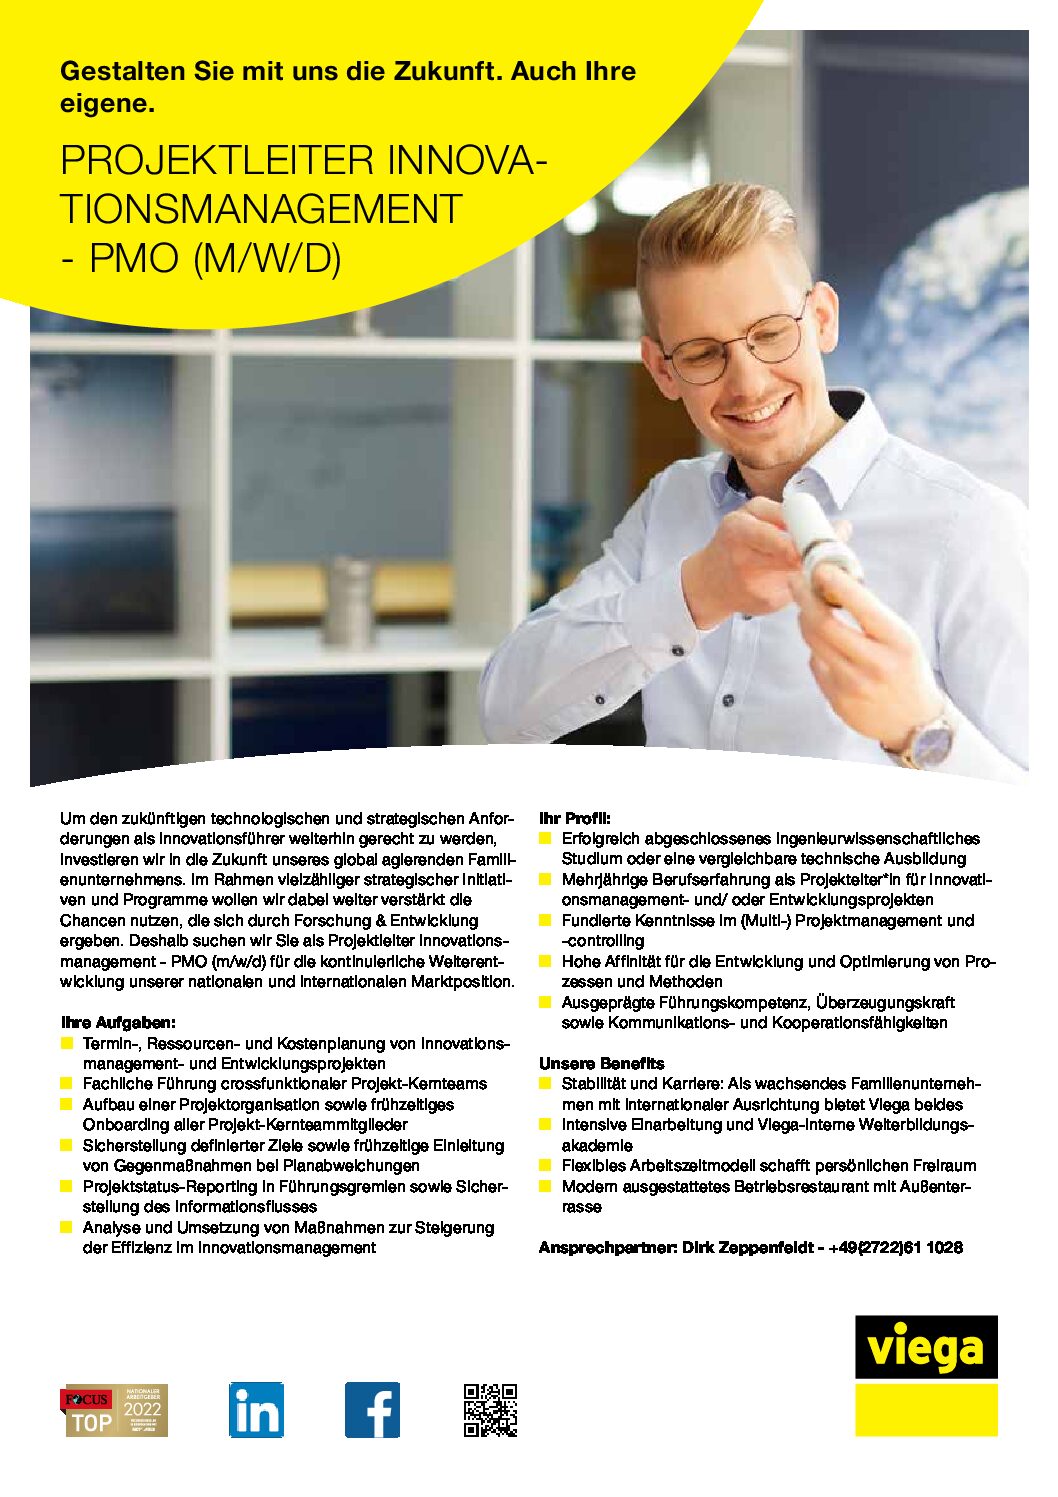 Viega_Projektleiter-Innovationsmanagement-PMO-4-pdf  